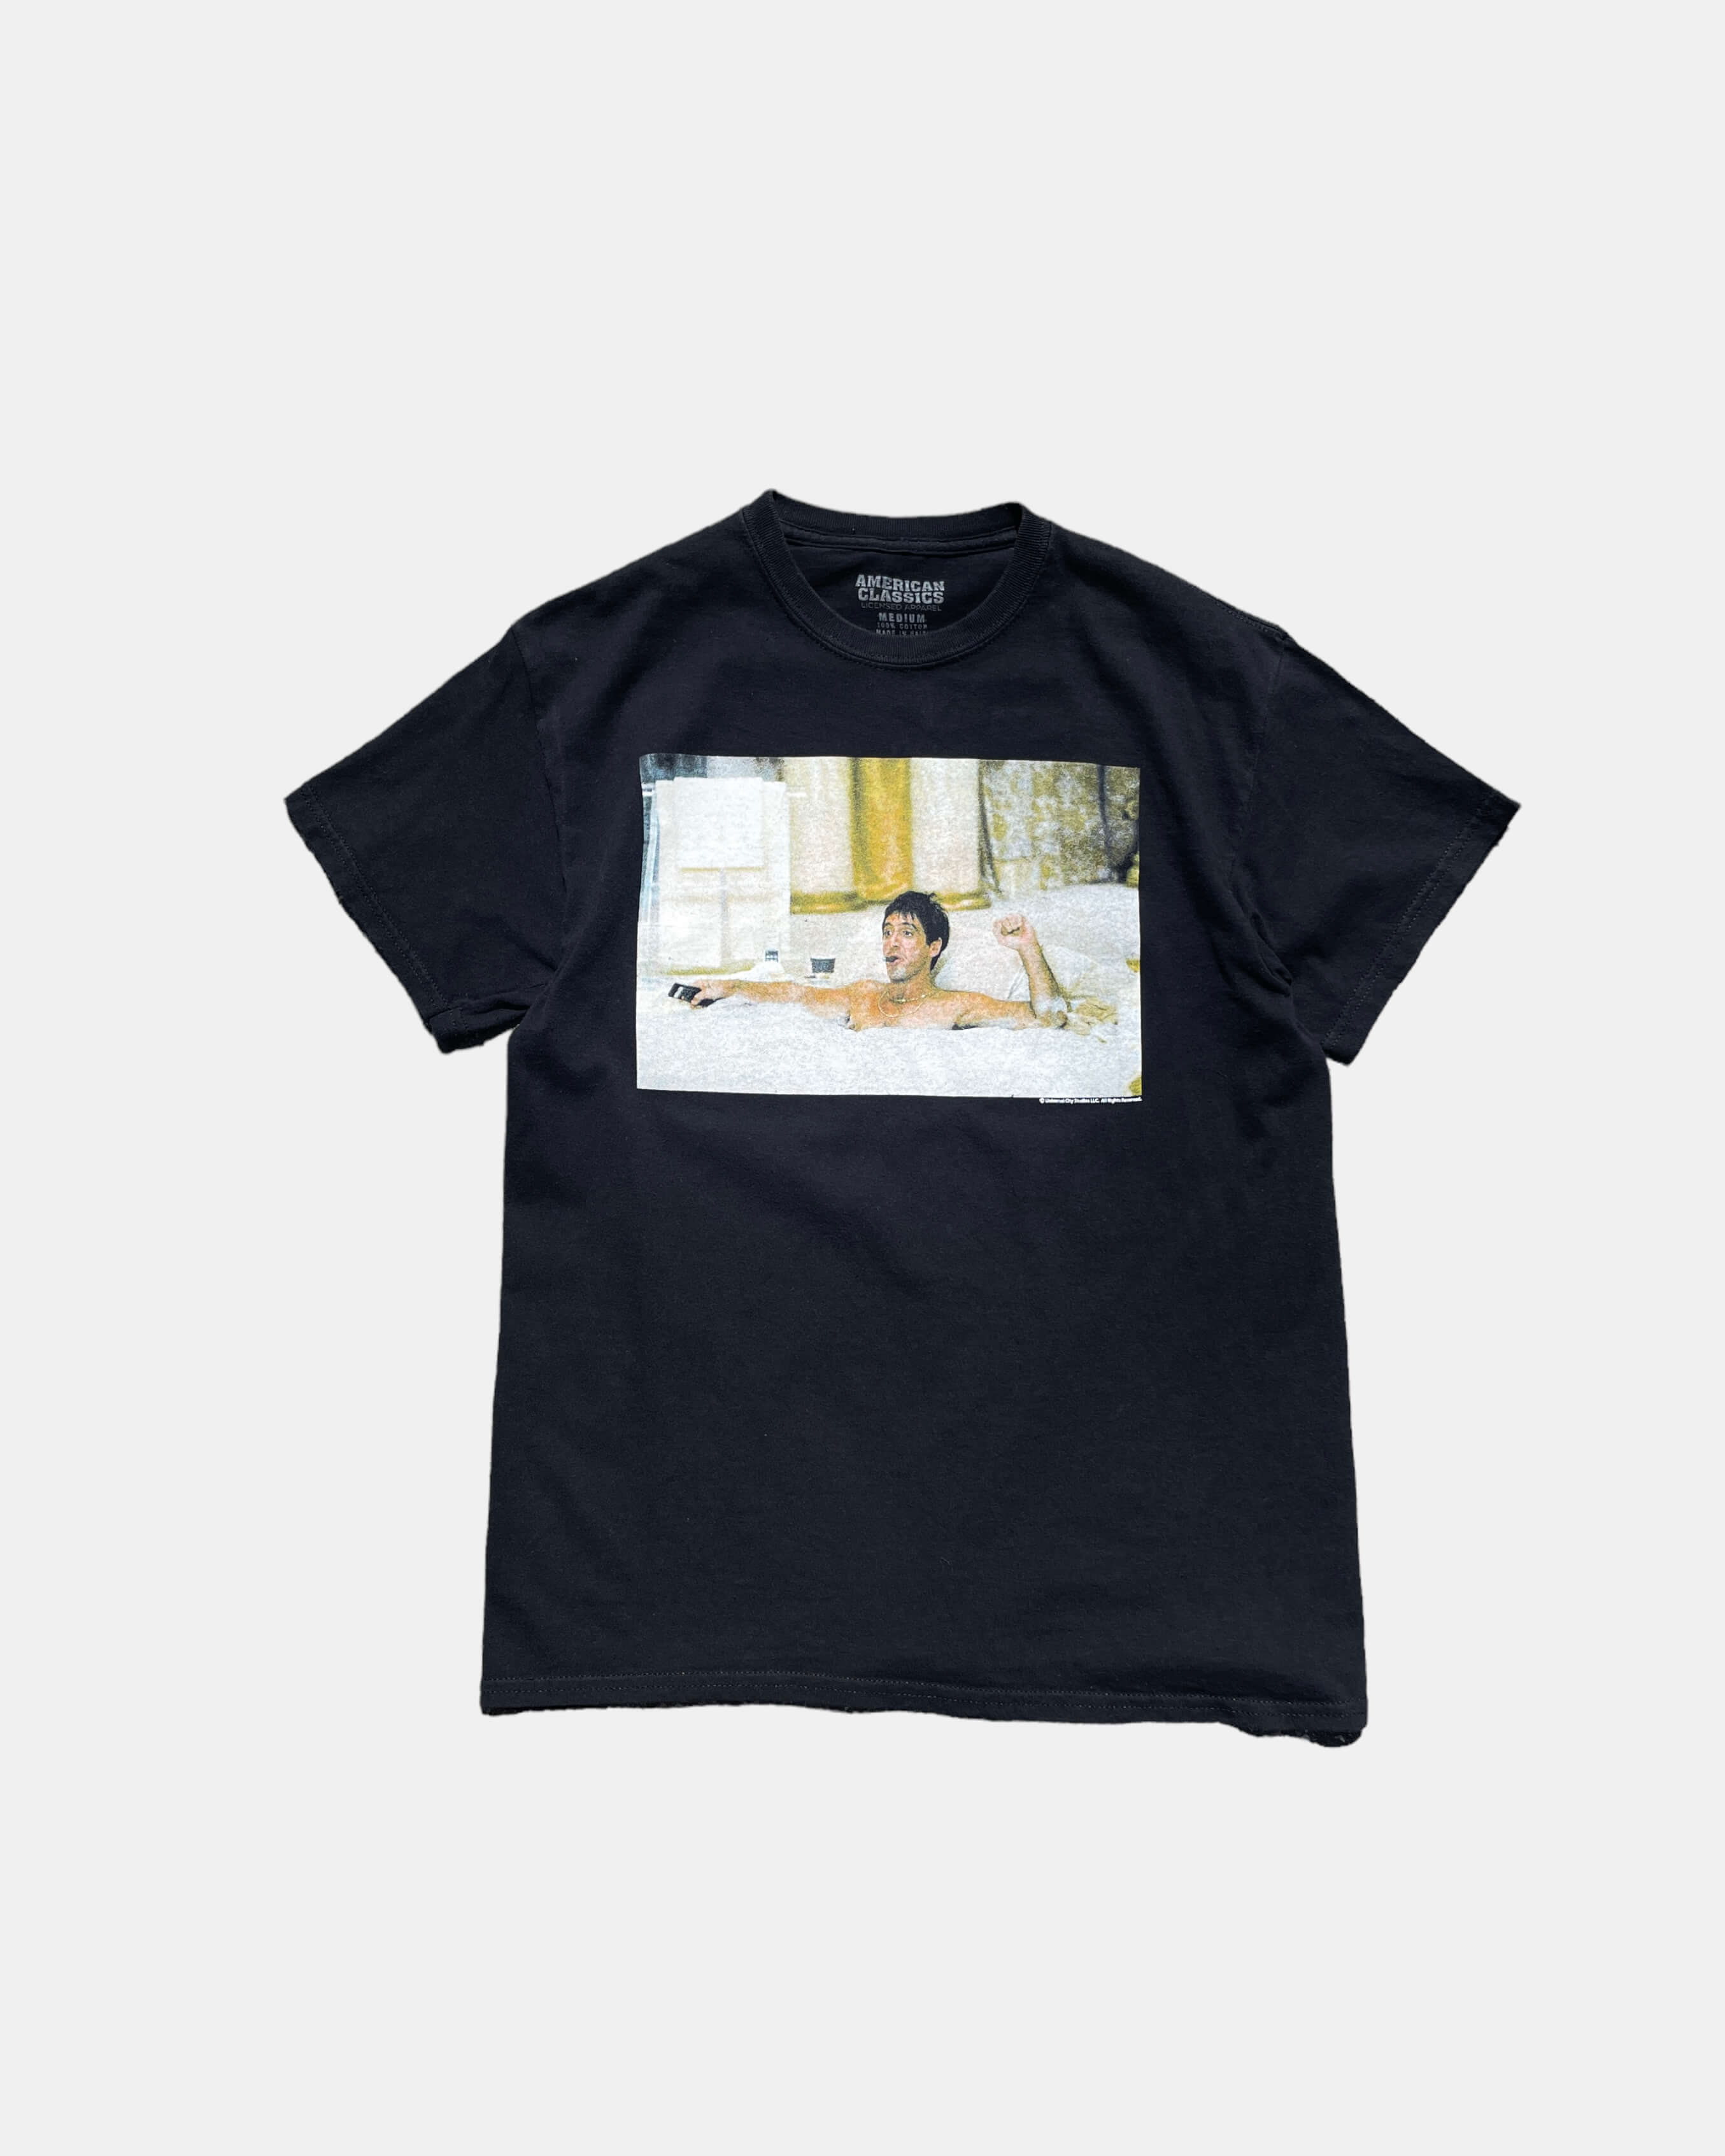 Vintage Alpacino Scarface T-shirts